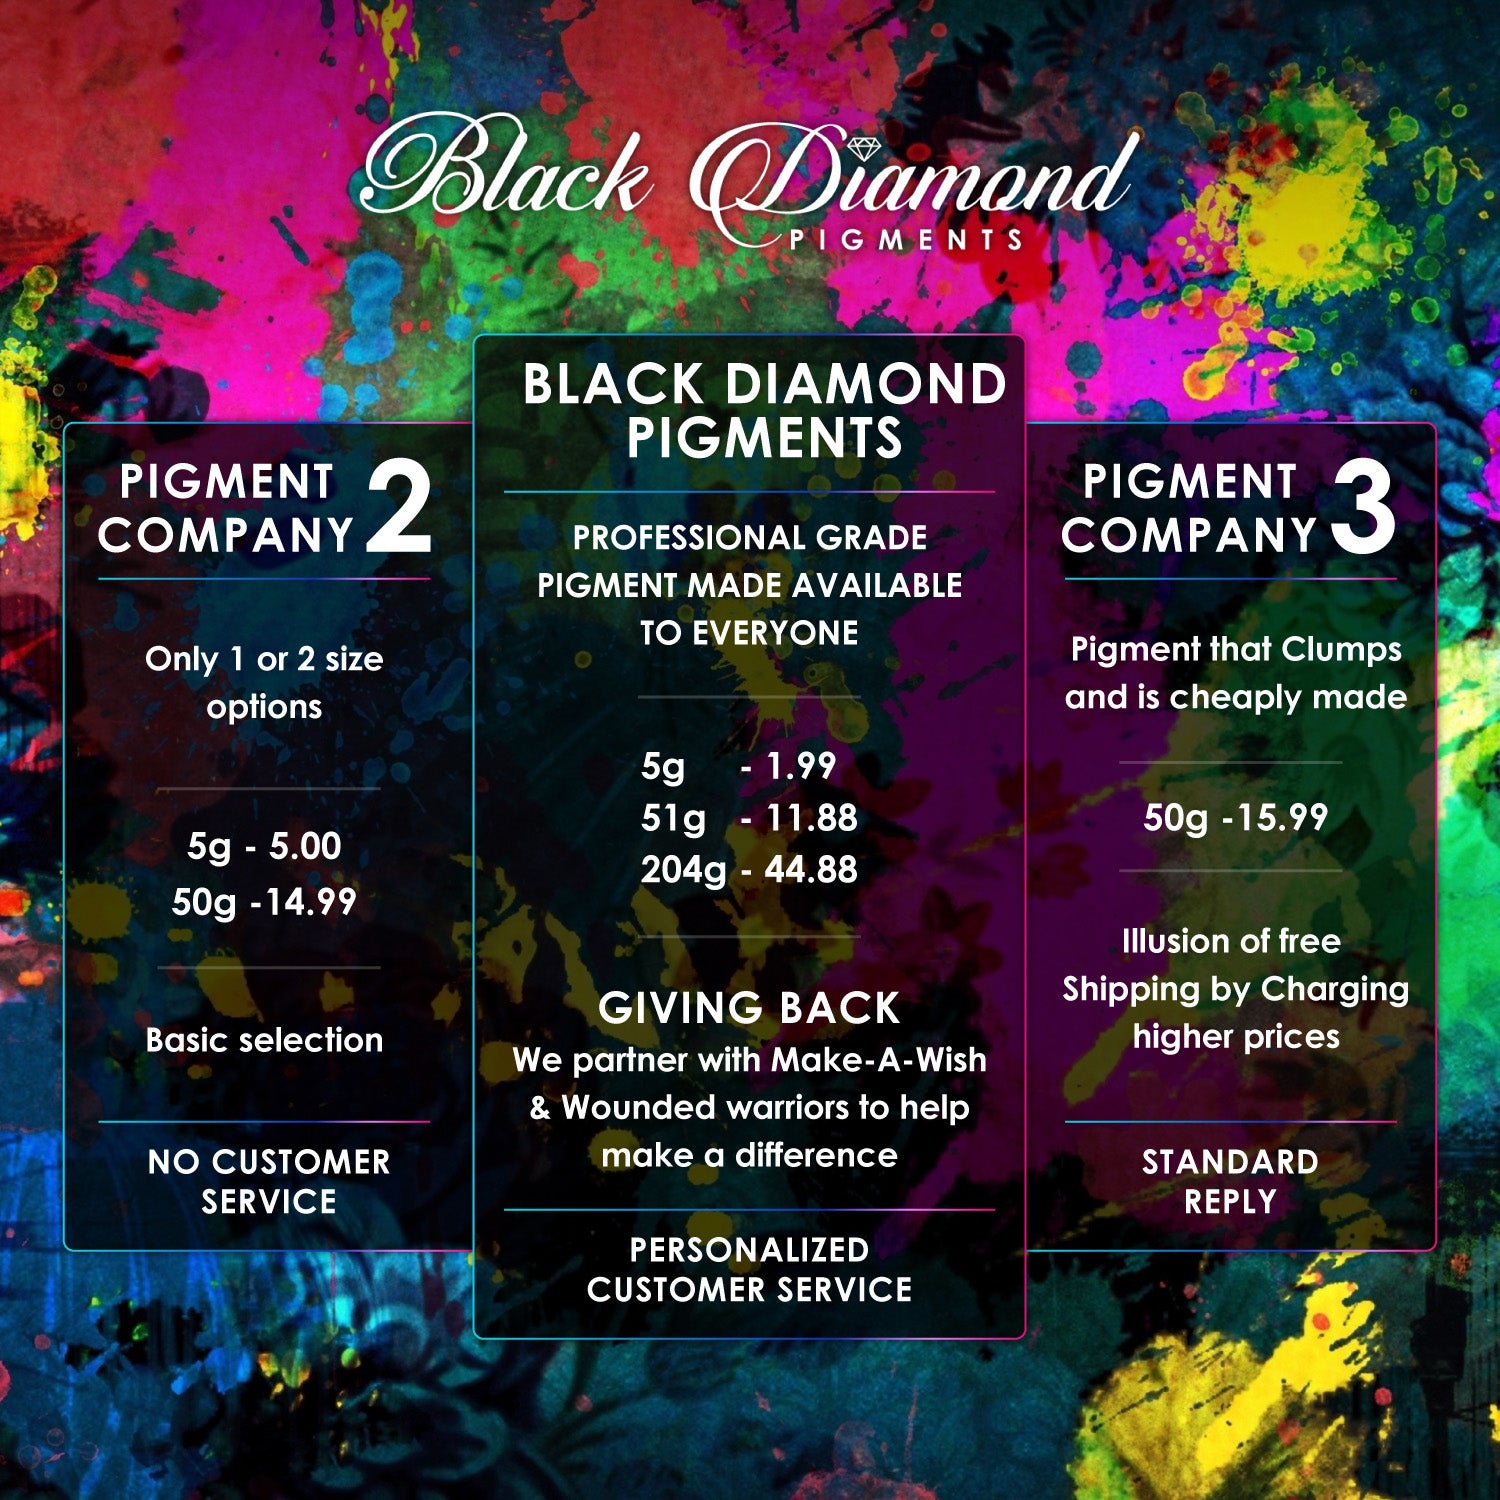 "JUNGLE GREEN" Black Diamond Pigments